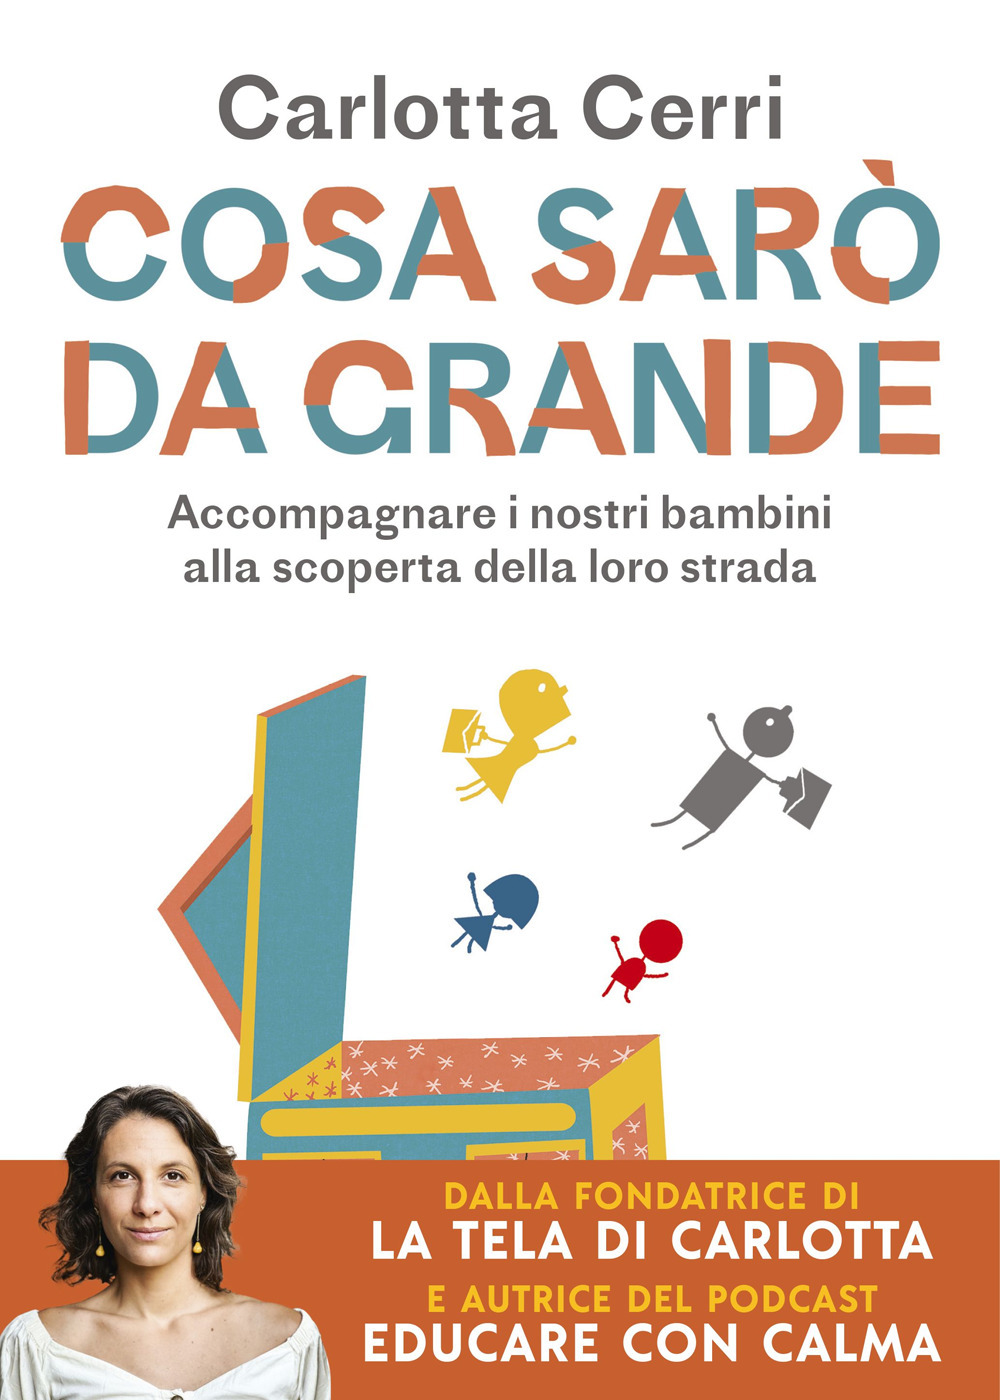 Classifica libri più venduti in Italia